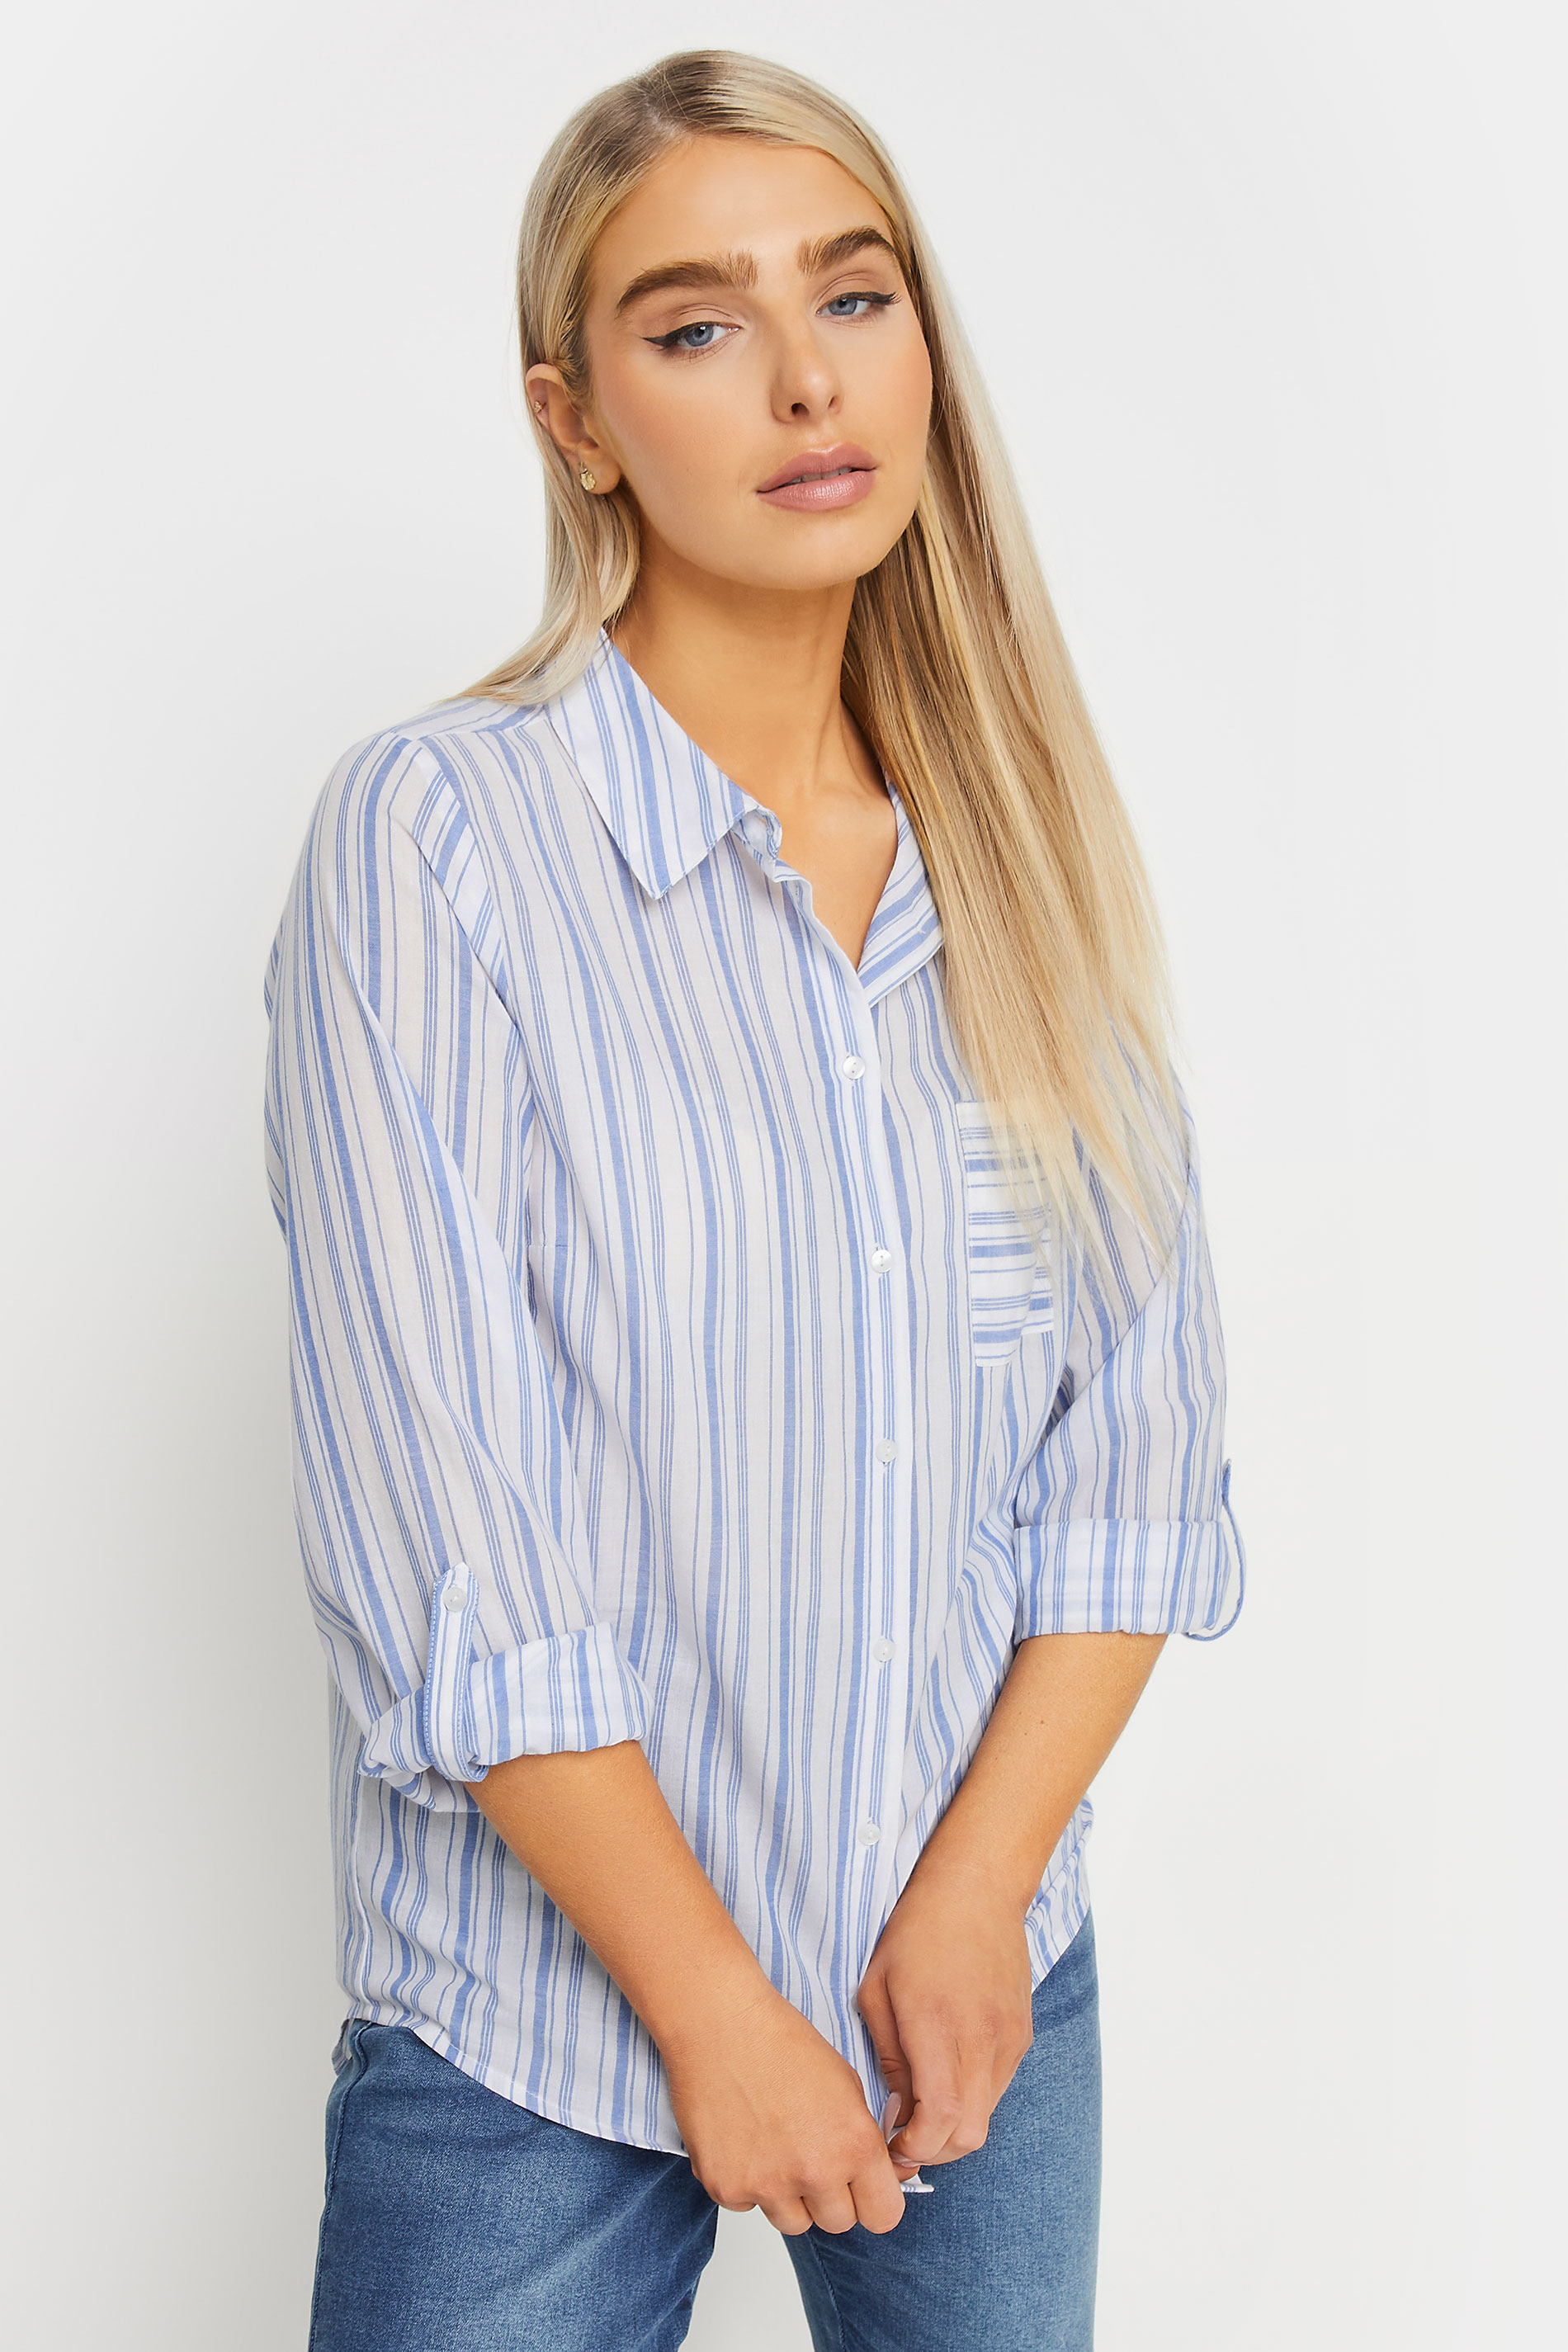 M&Co White & Blue Striped Tab Sleeve Shirt | M&Co 1